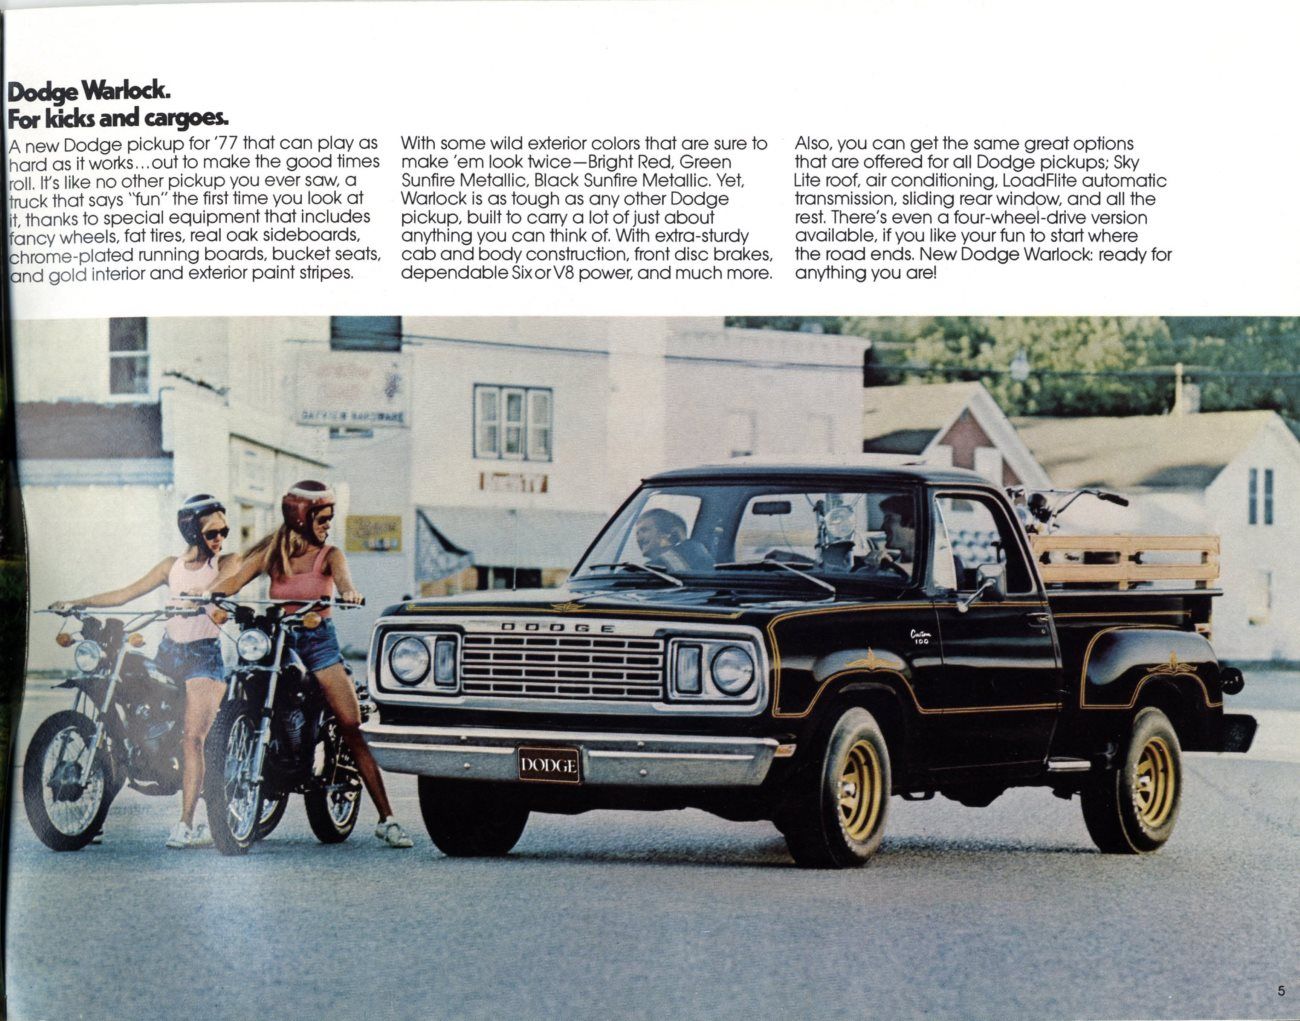 1977 Dodge D100 Warlock advertisement